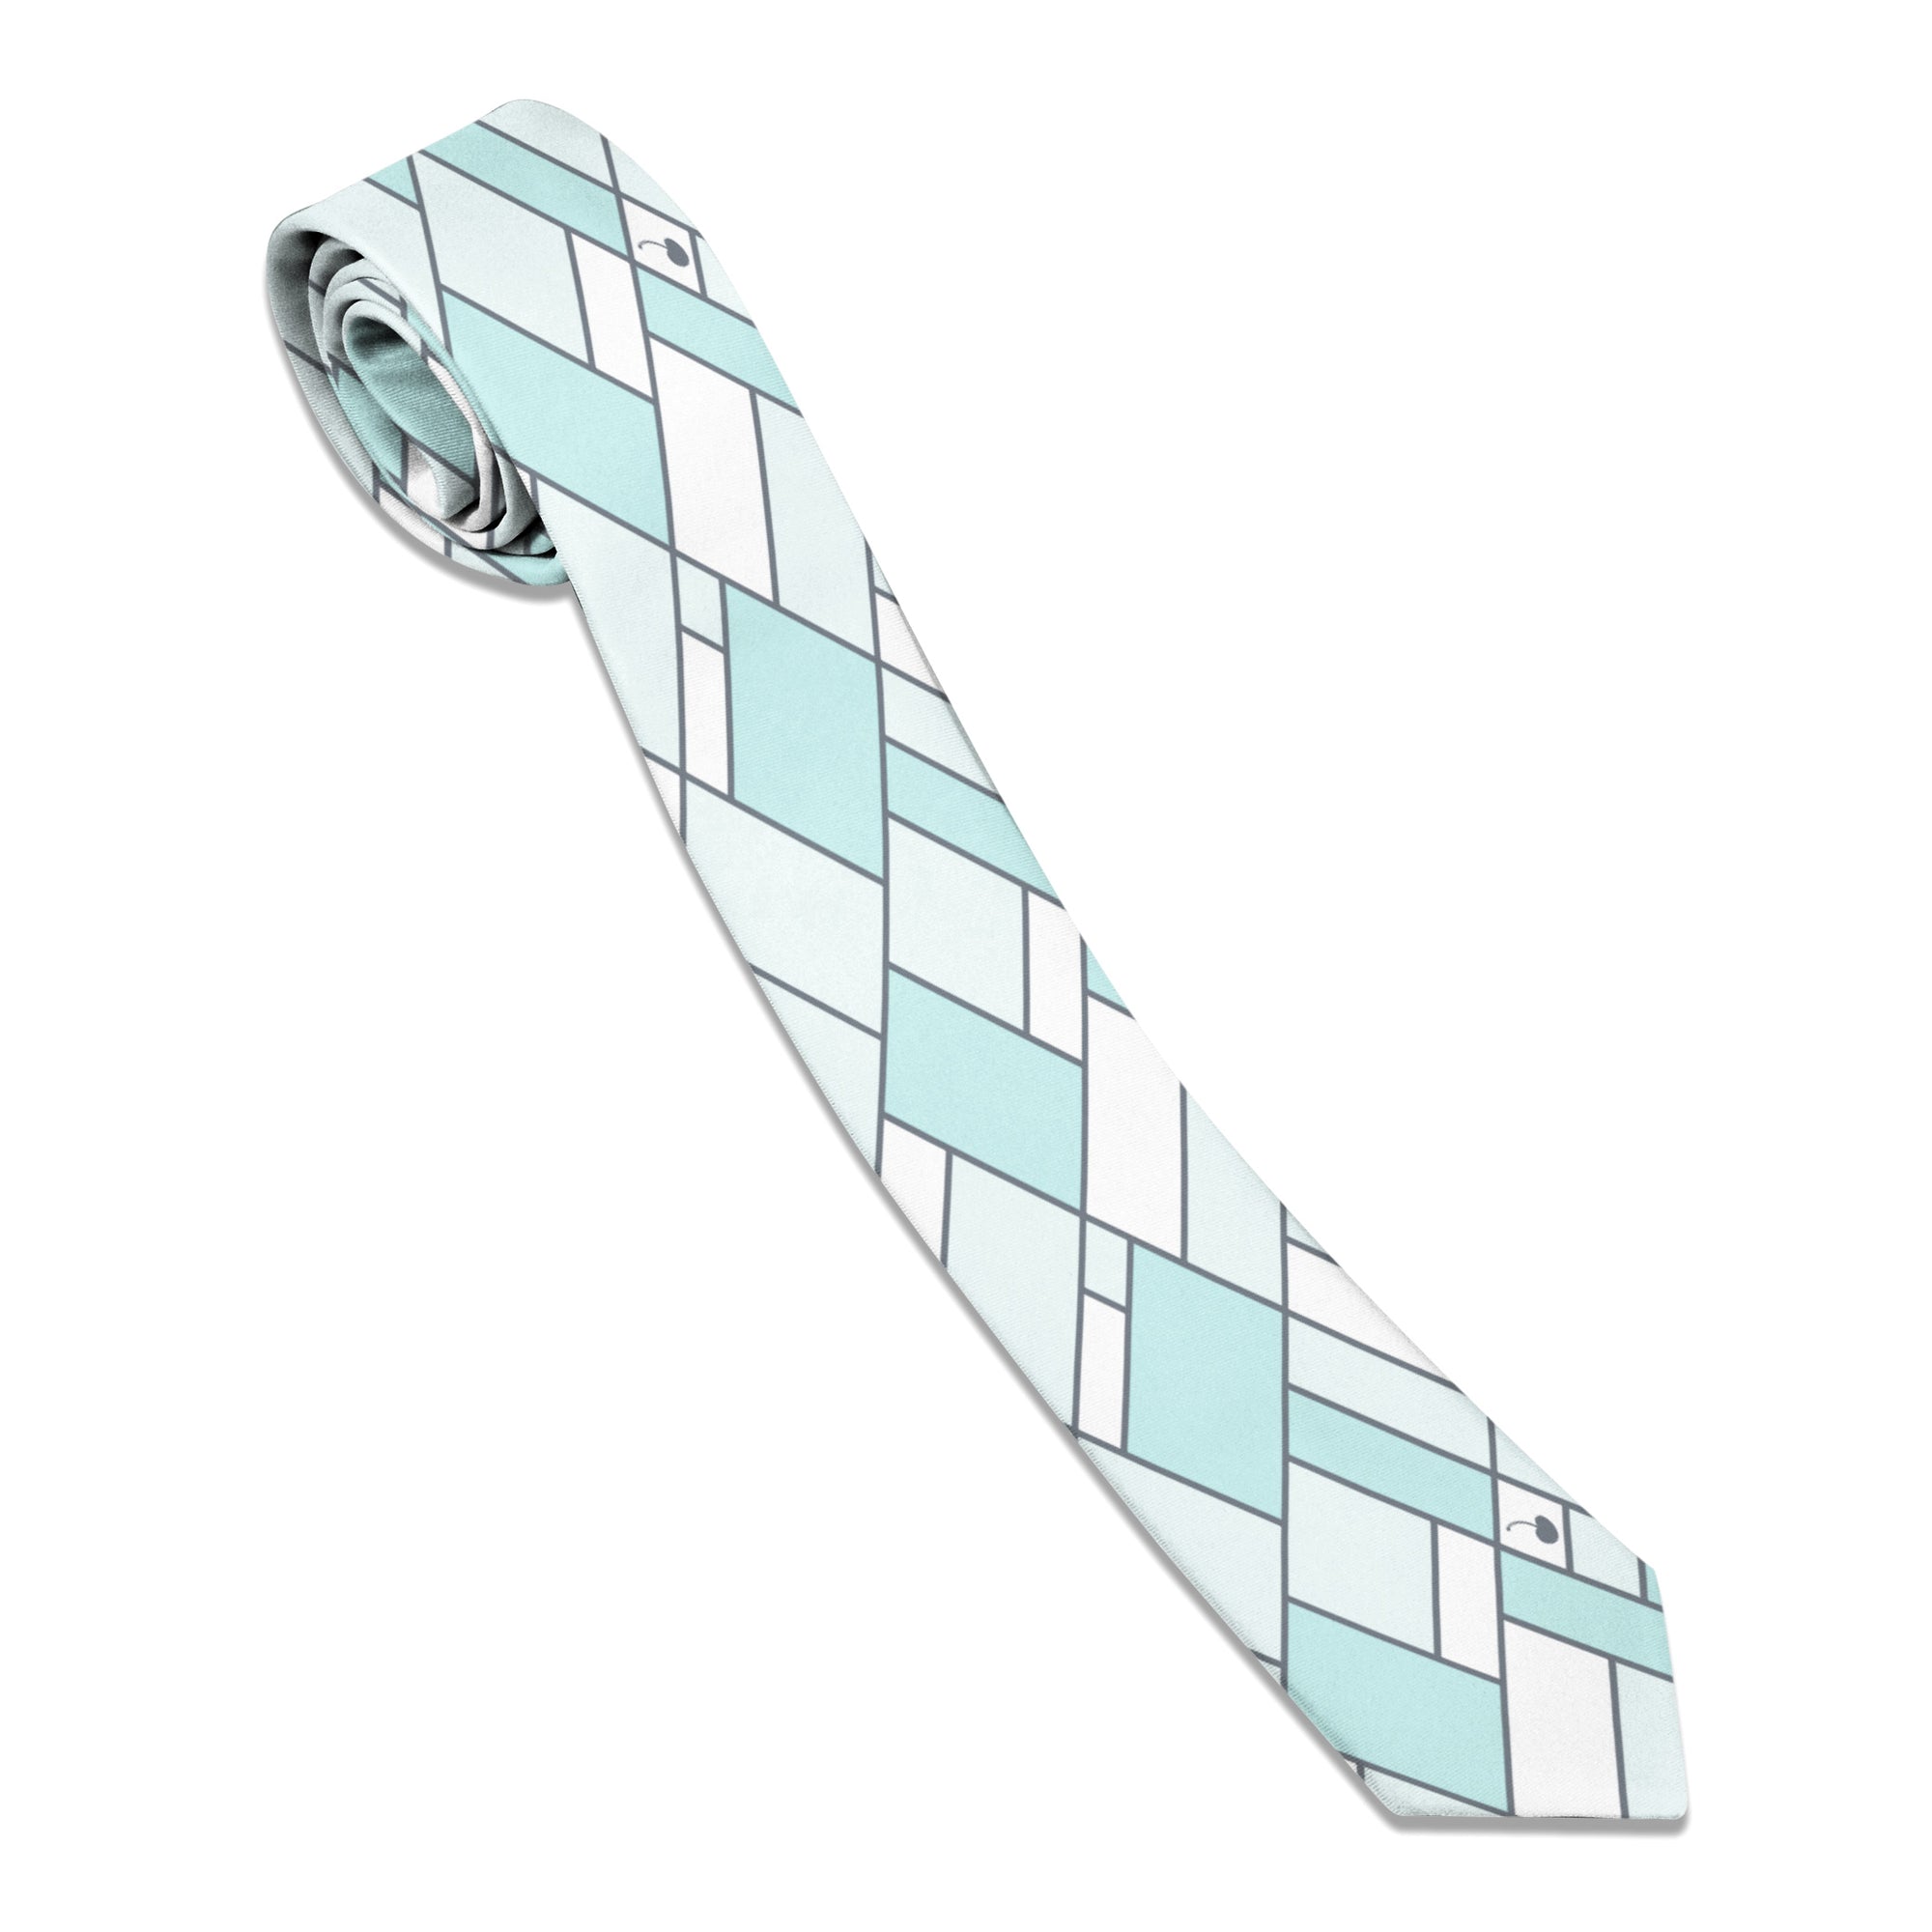 Cherry Creek Windowpane Necktie -  -  - Knotty Tie Co.